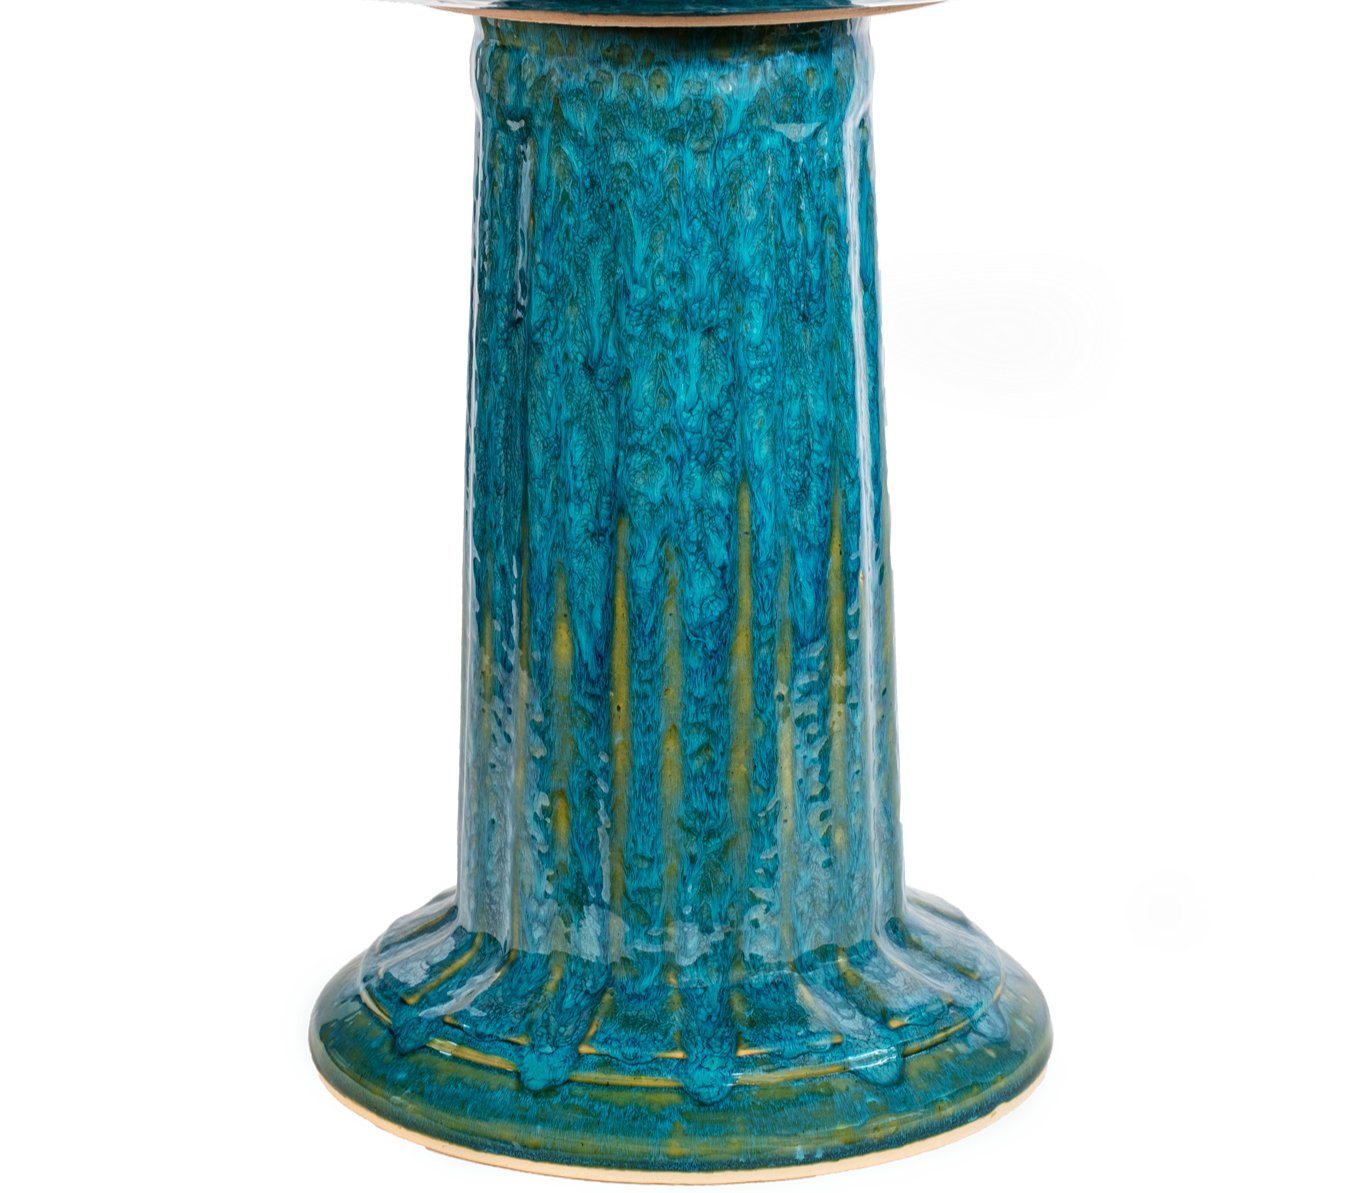 ceramic turquoise birdbath pedestal with column design